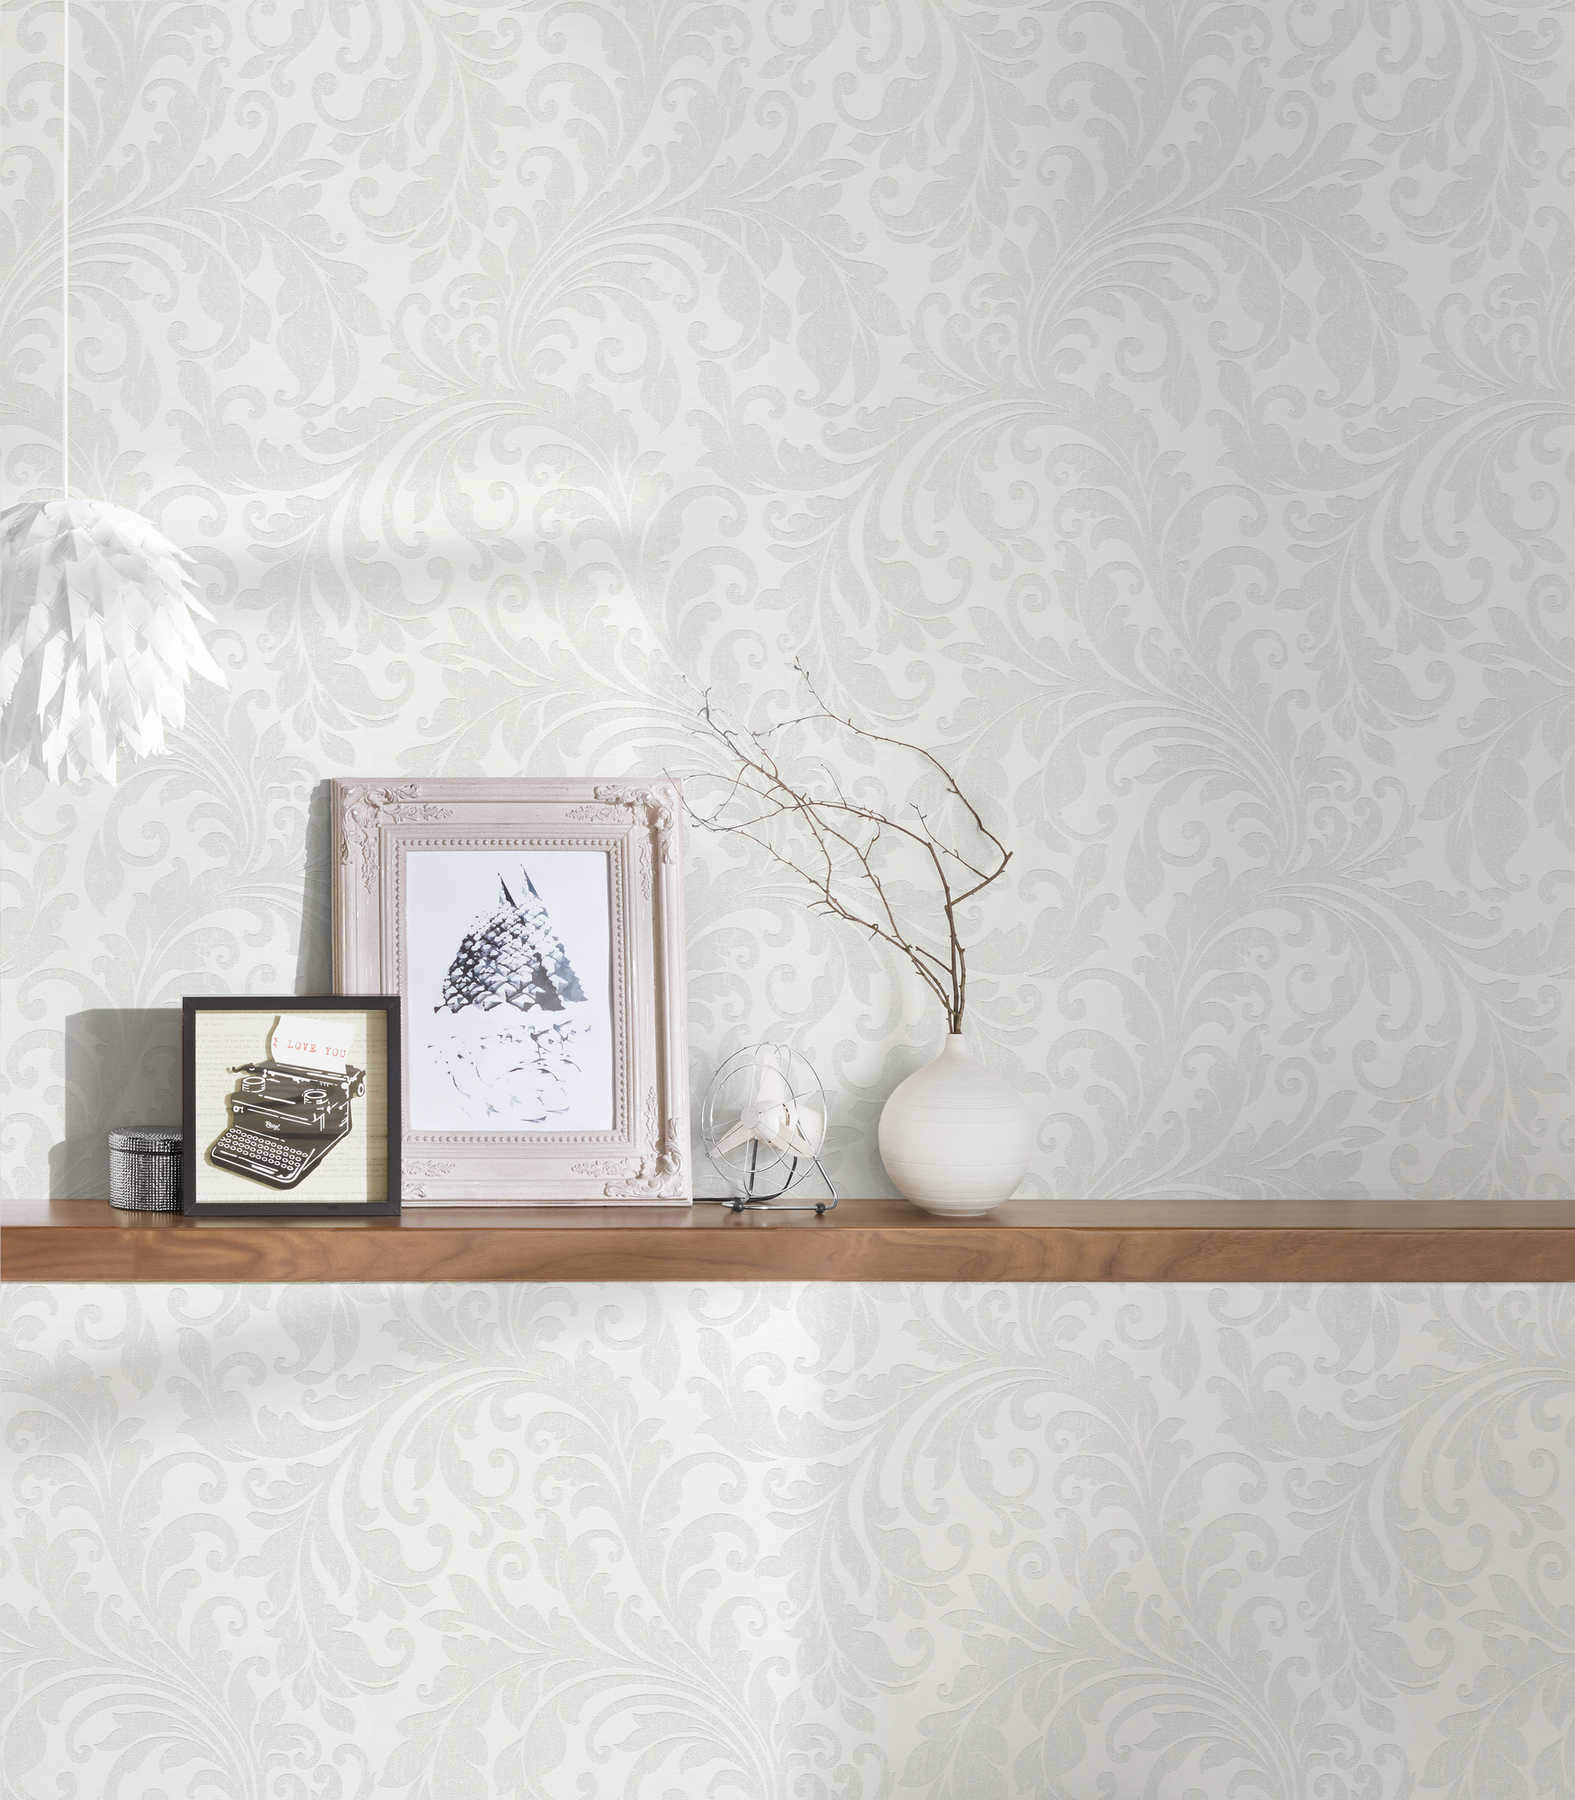             Tone on tone pattern wallpaper floral ornaments - grey, white
        